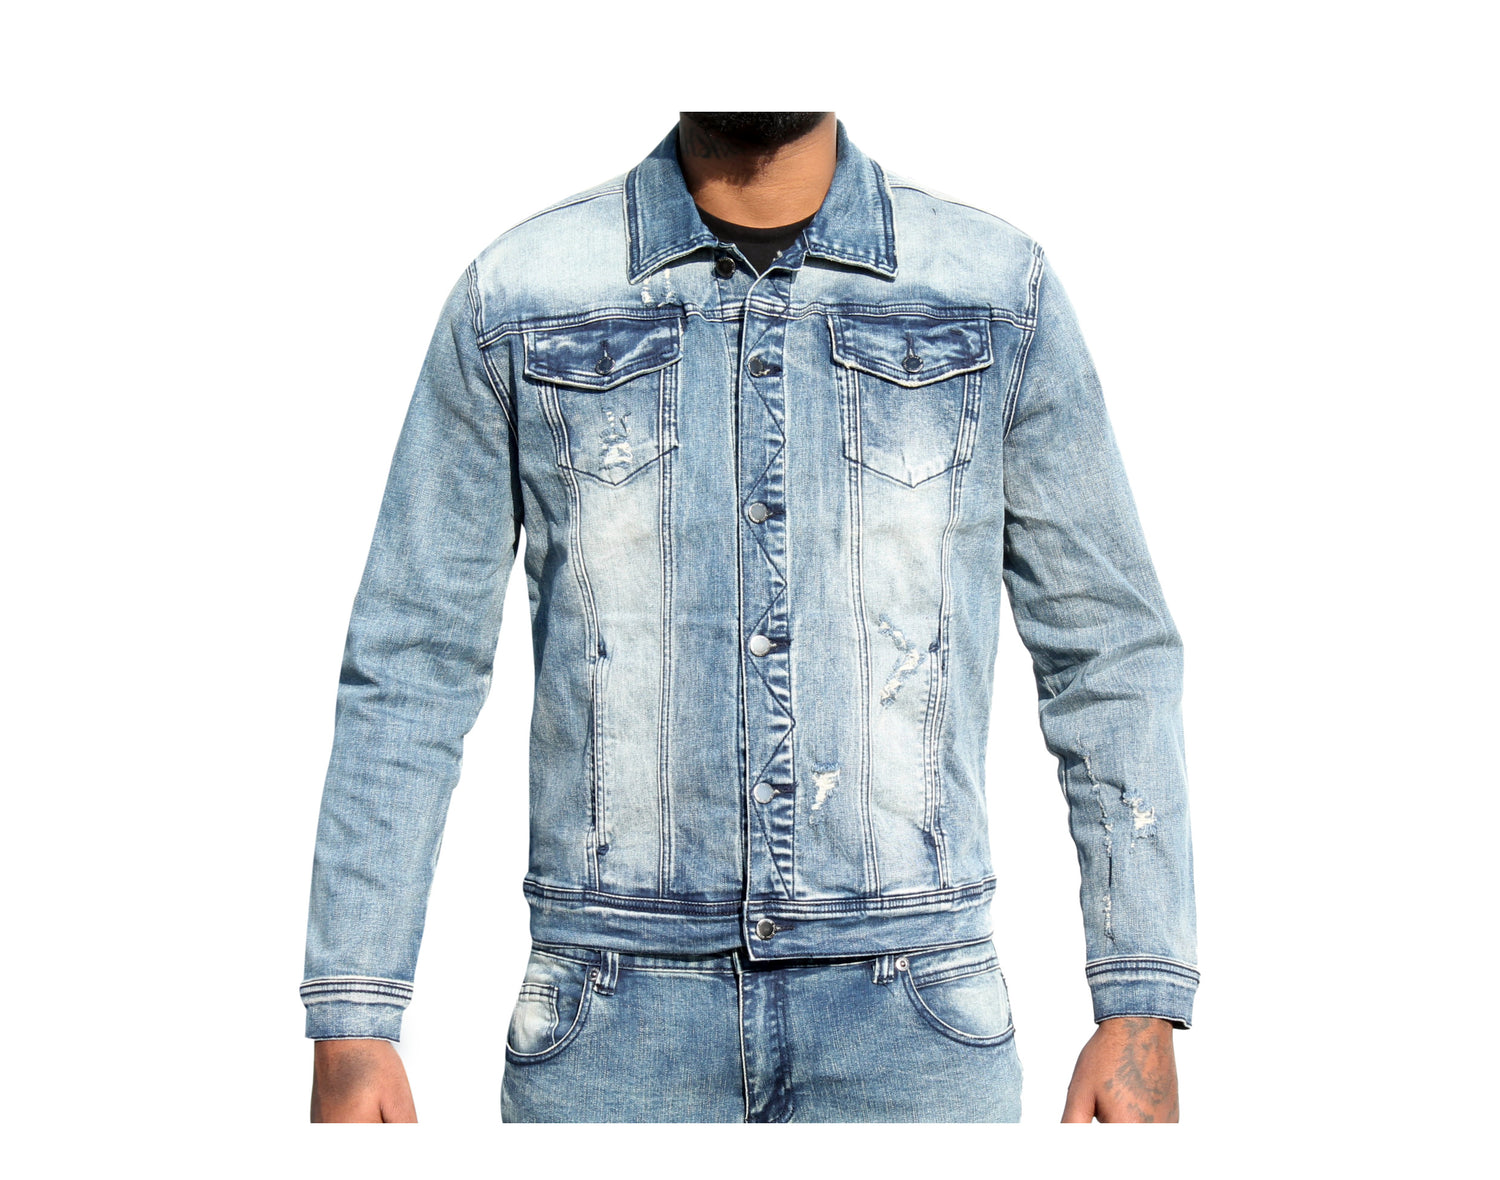 Kilogram Denim Classic Men's Jeans Jacket